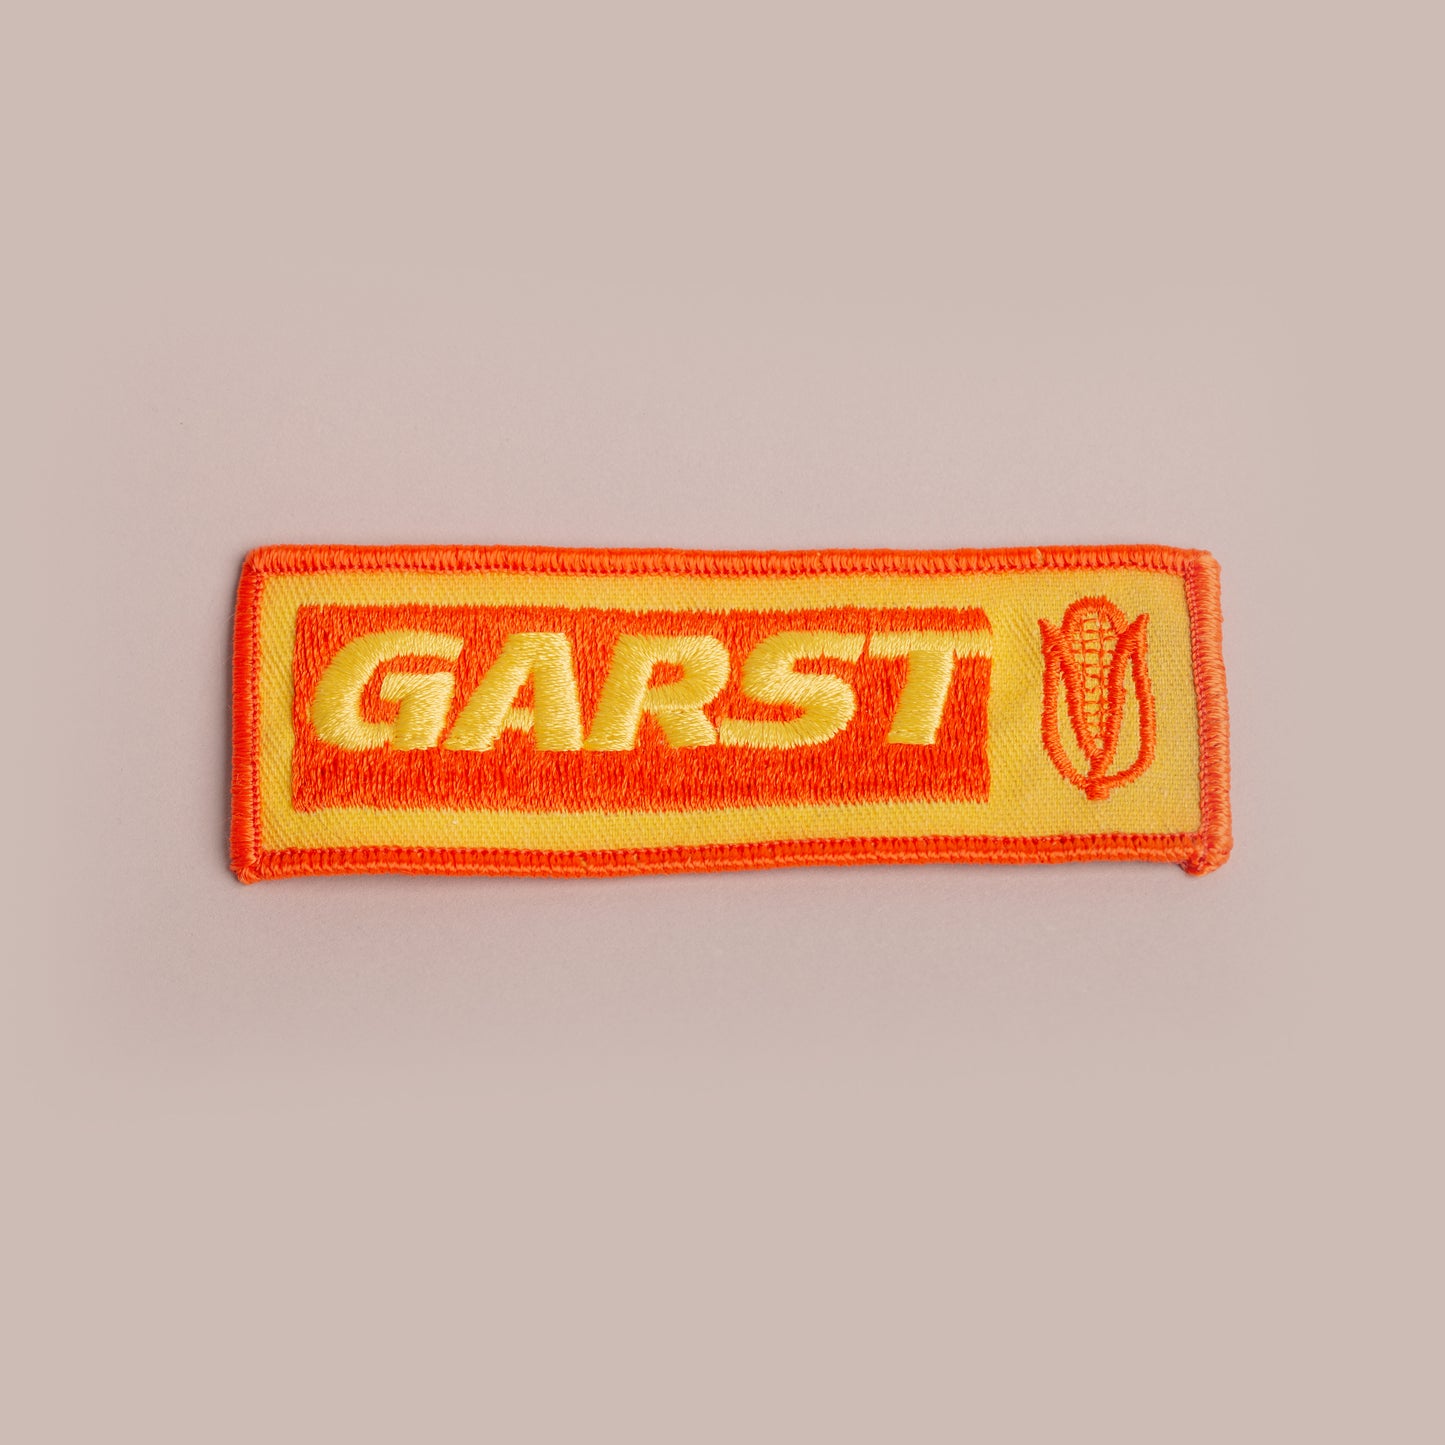 Vintage Patch - Garst